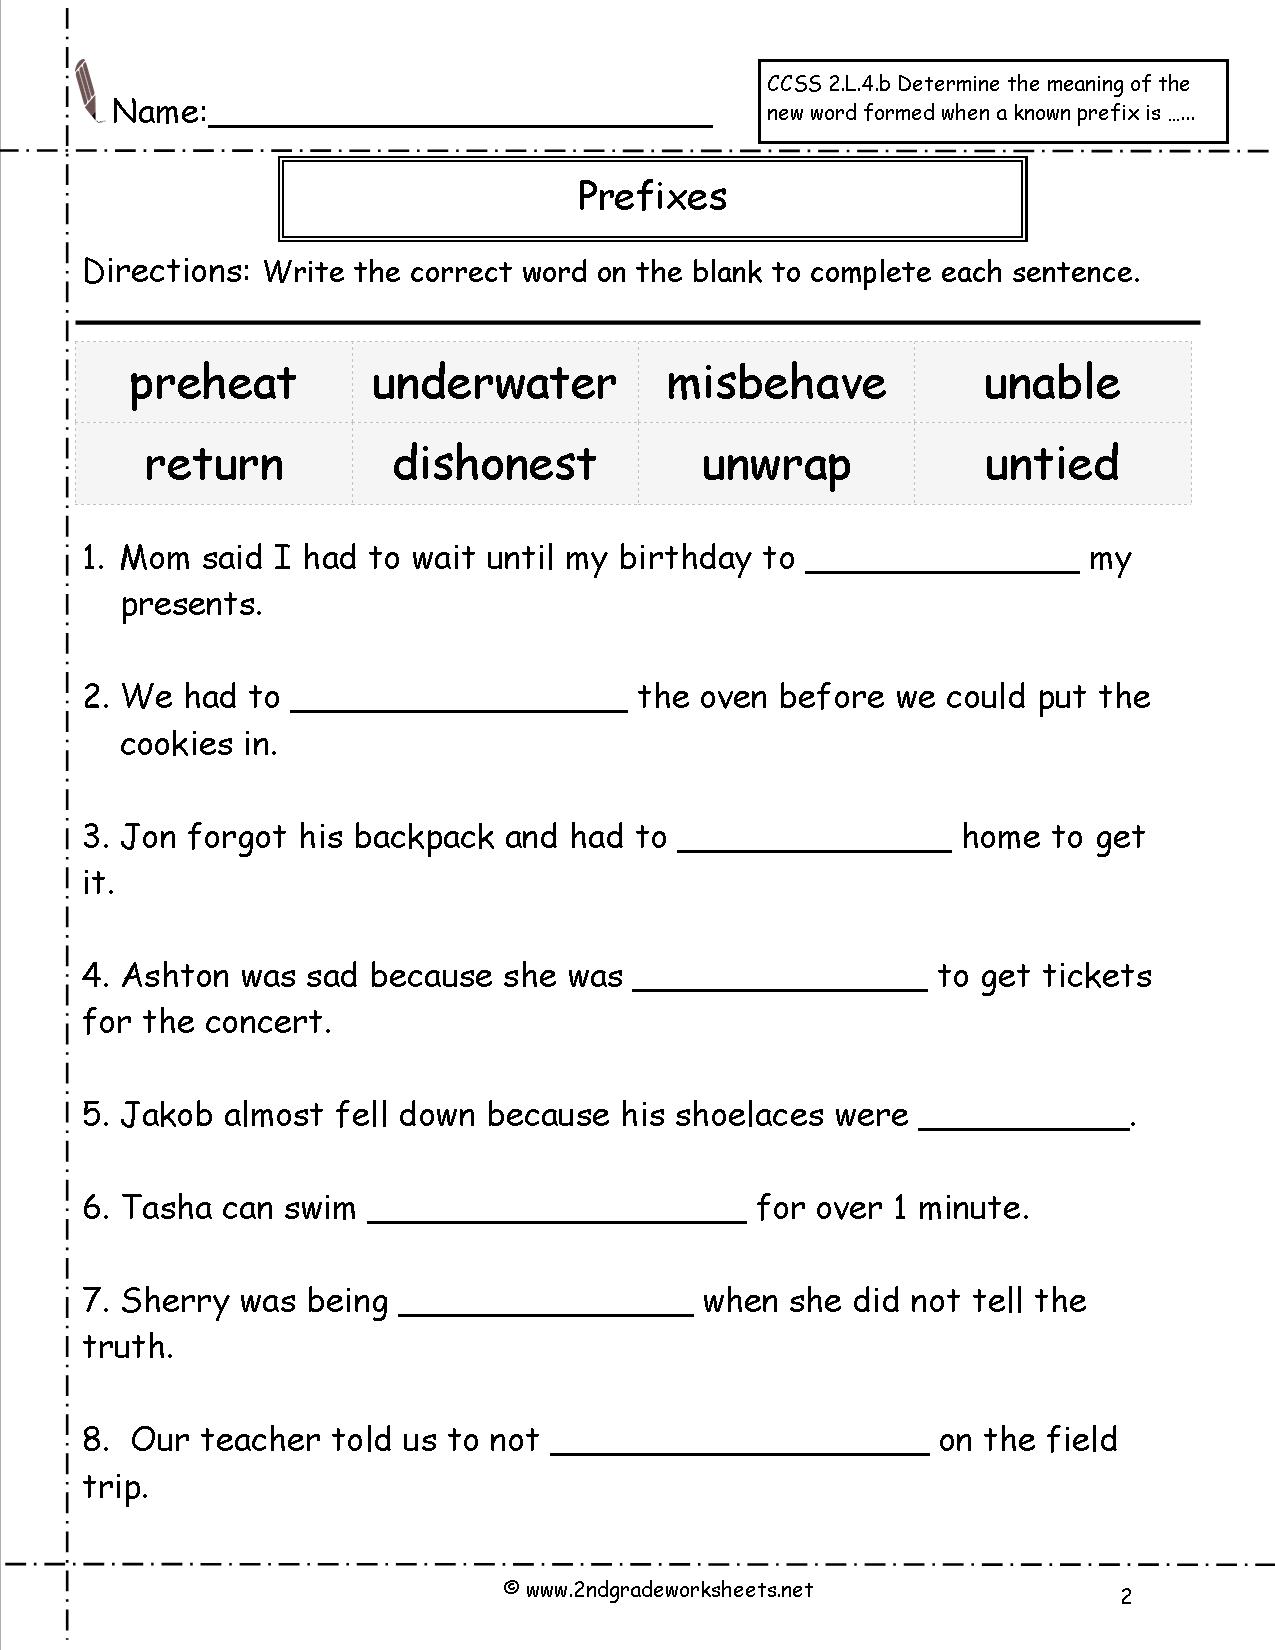 Prefix Suffix Worksheets 2nd Grade Image